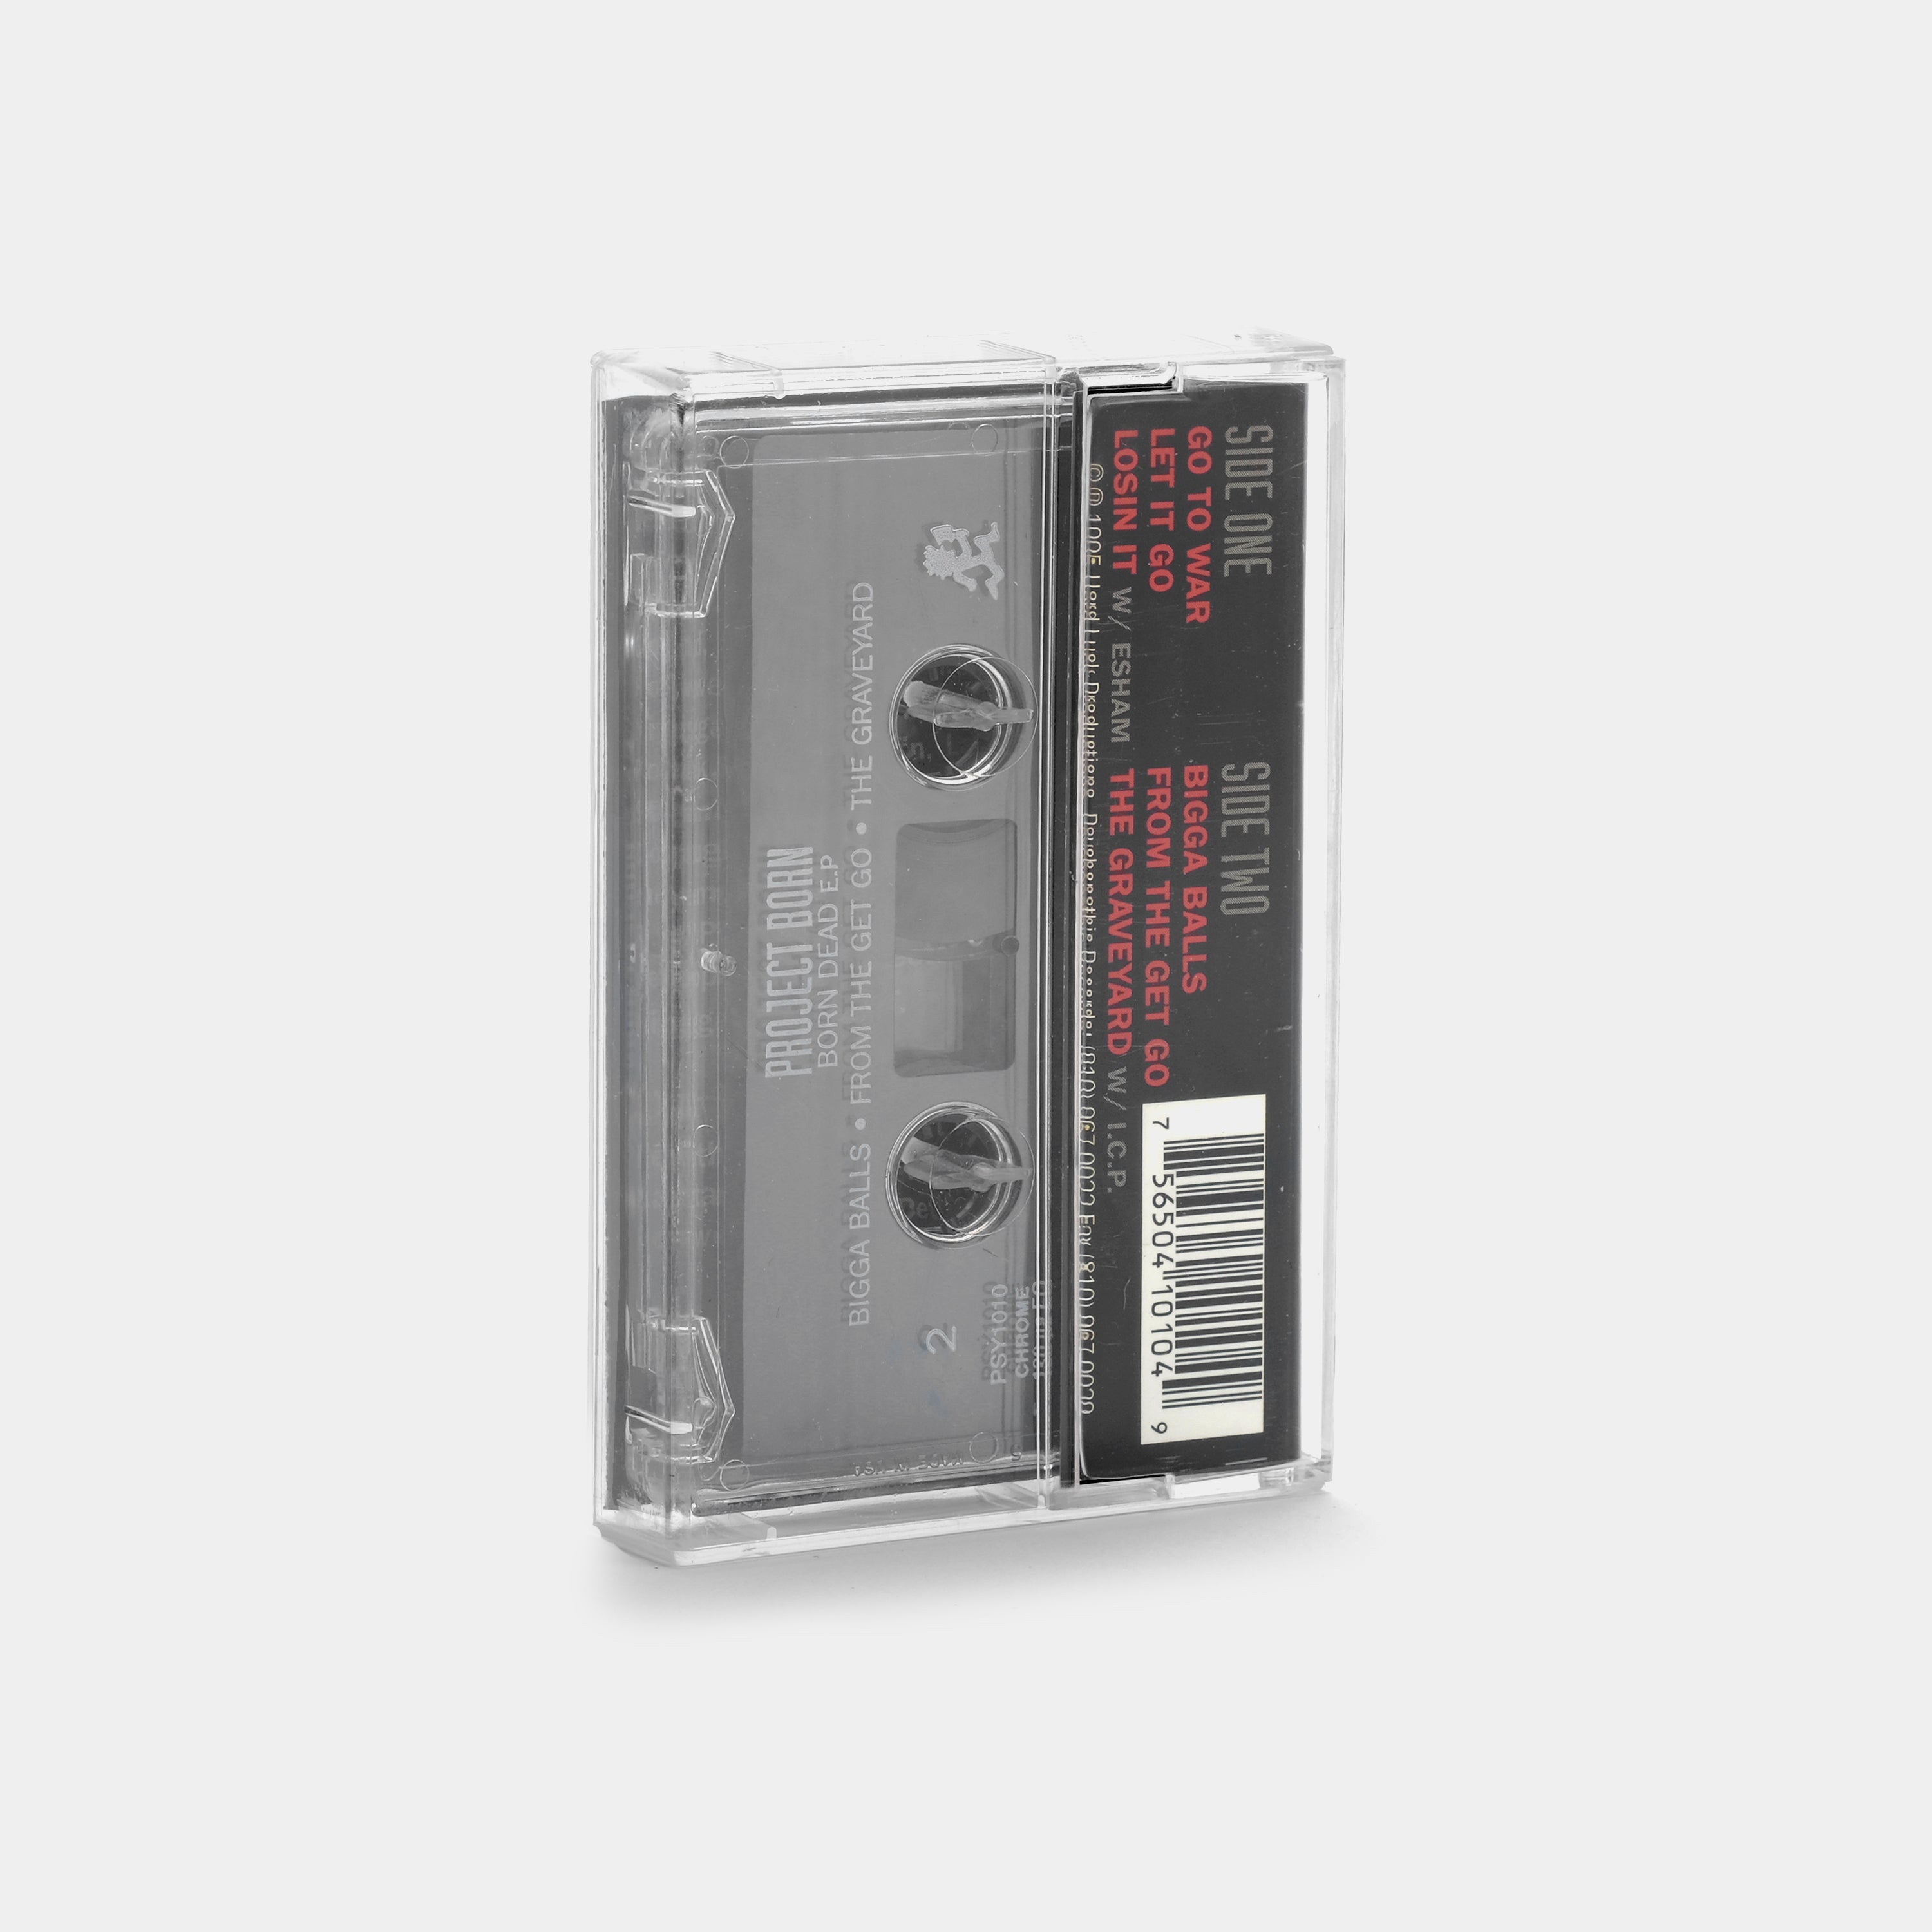 Project Born - Born Dead Cassette Tape